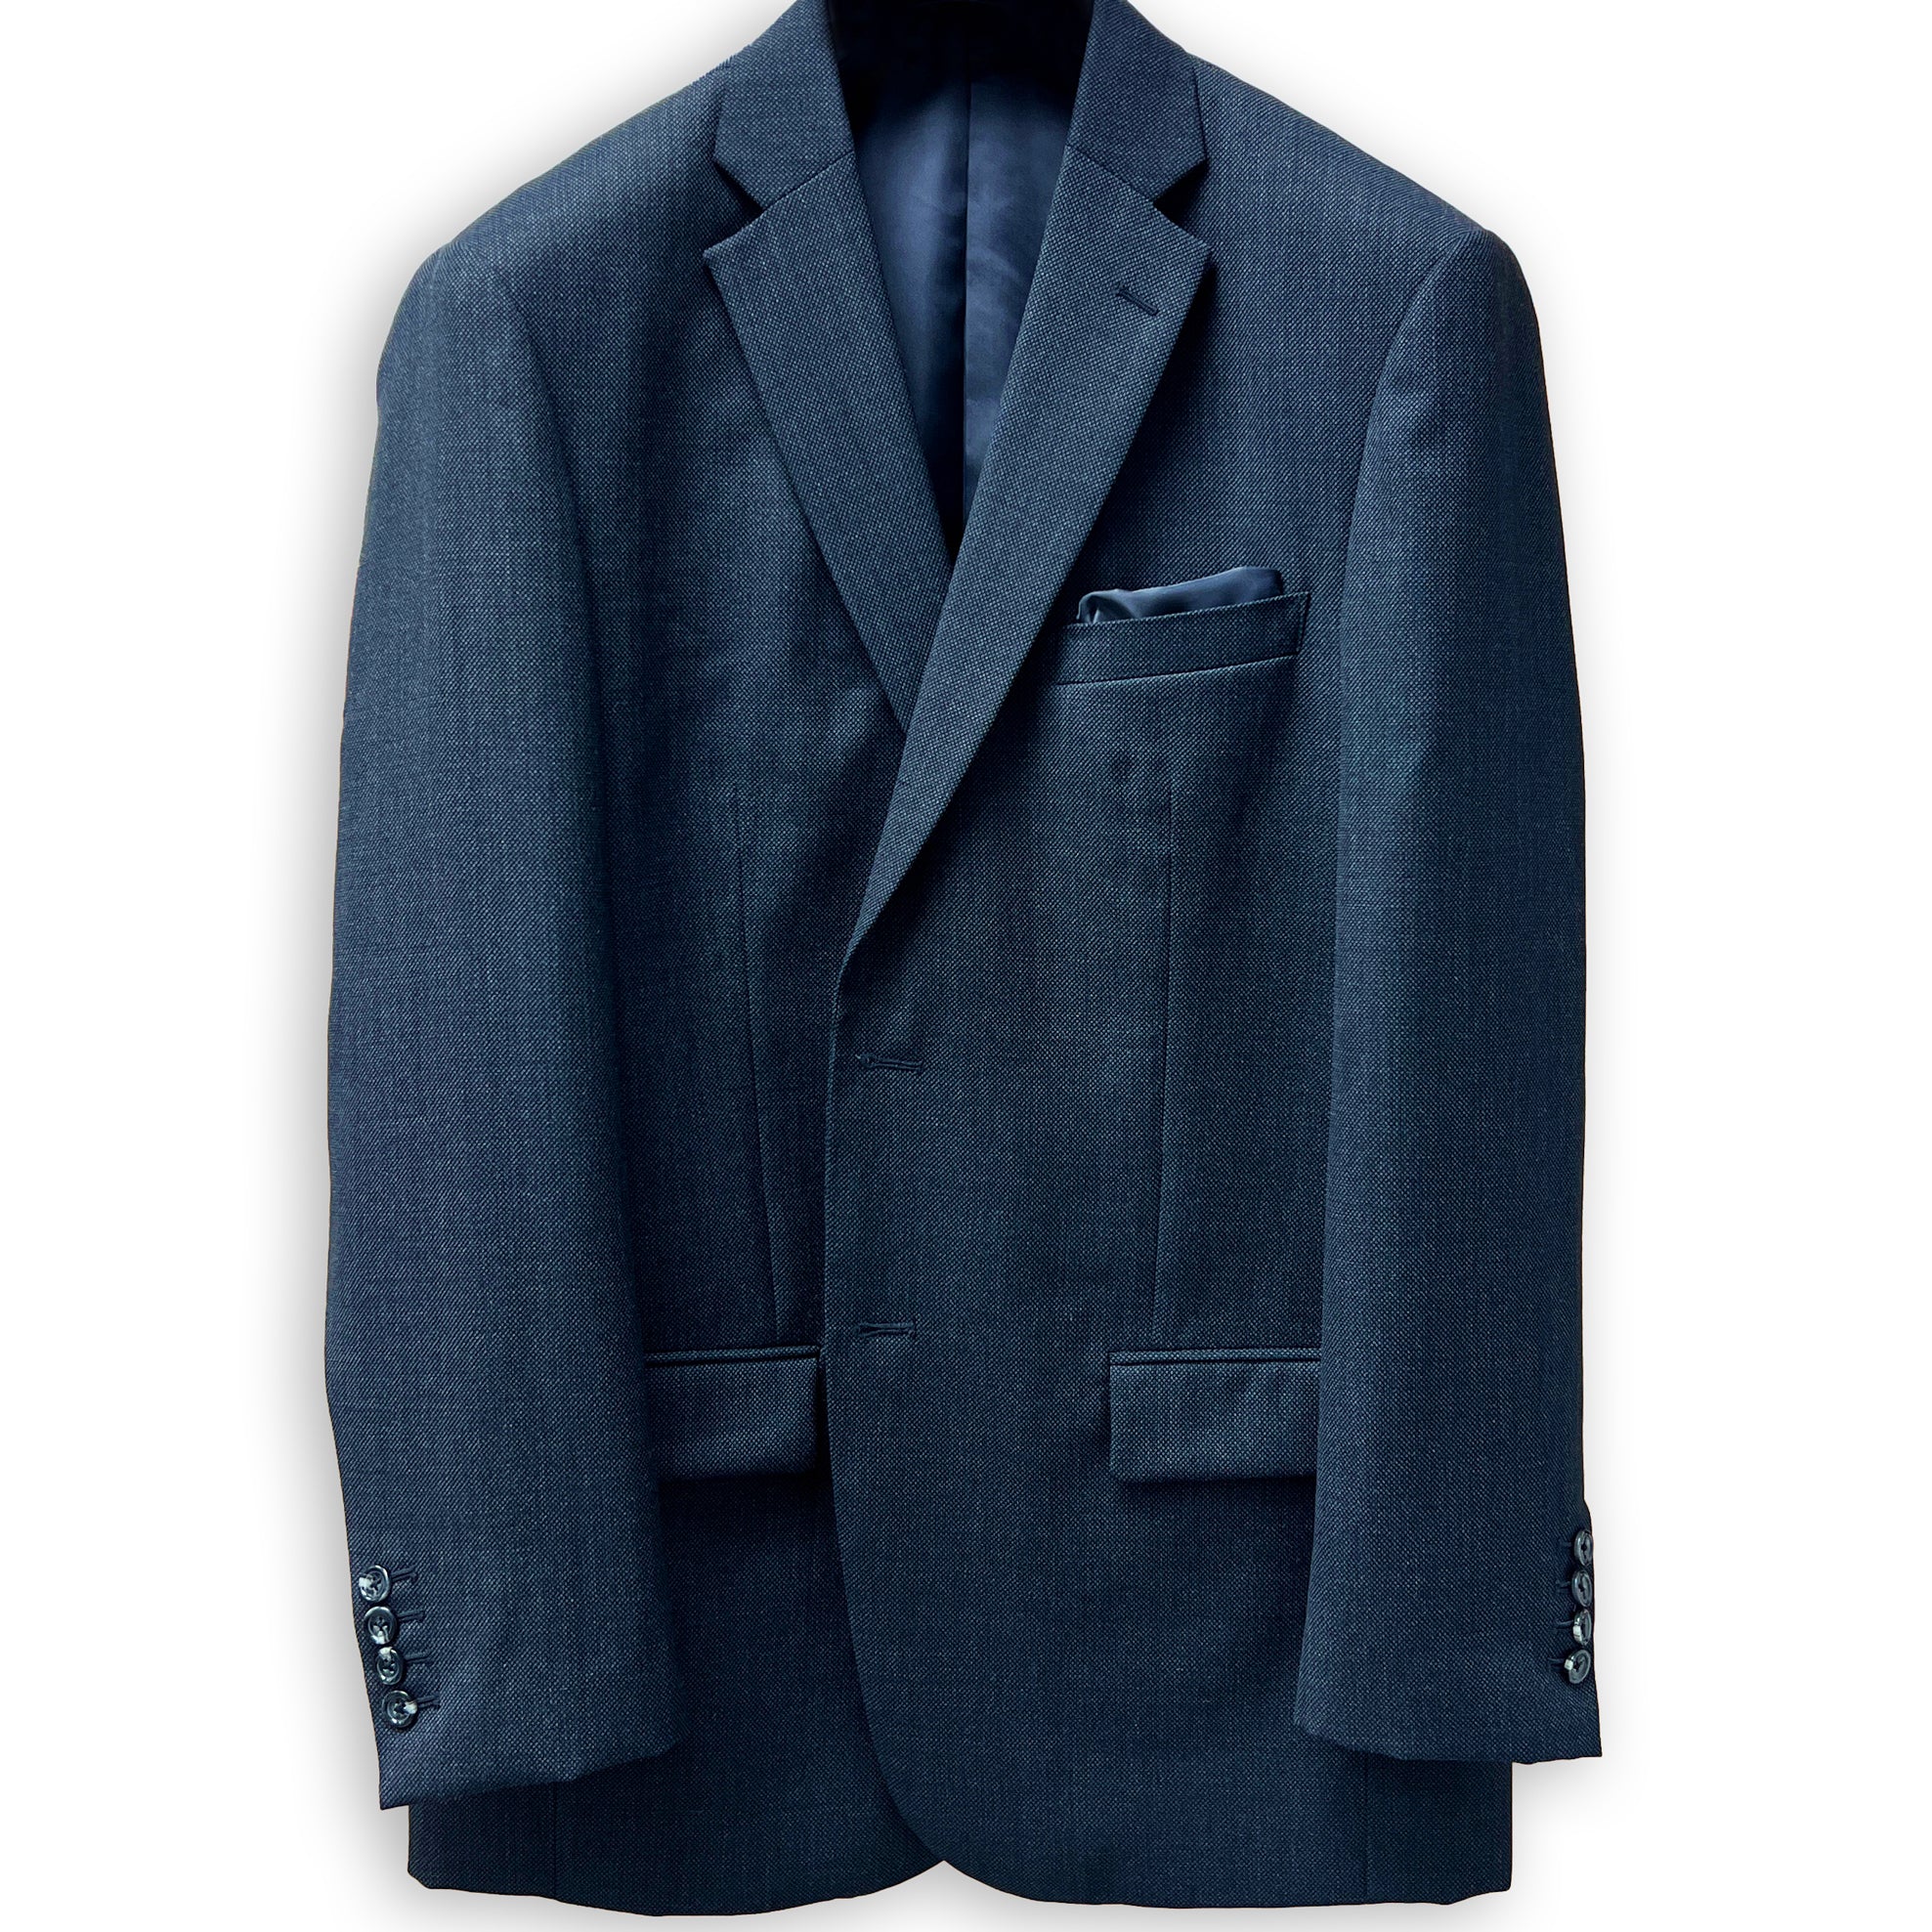 Dark grey birdseye men's suit, rear view showcasing custom tailoring and online suit design